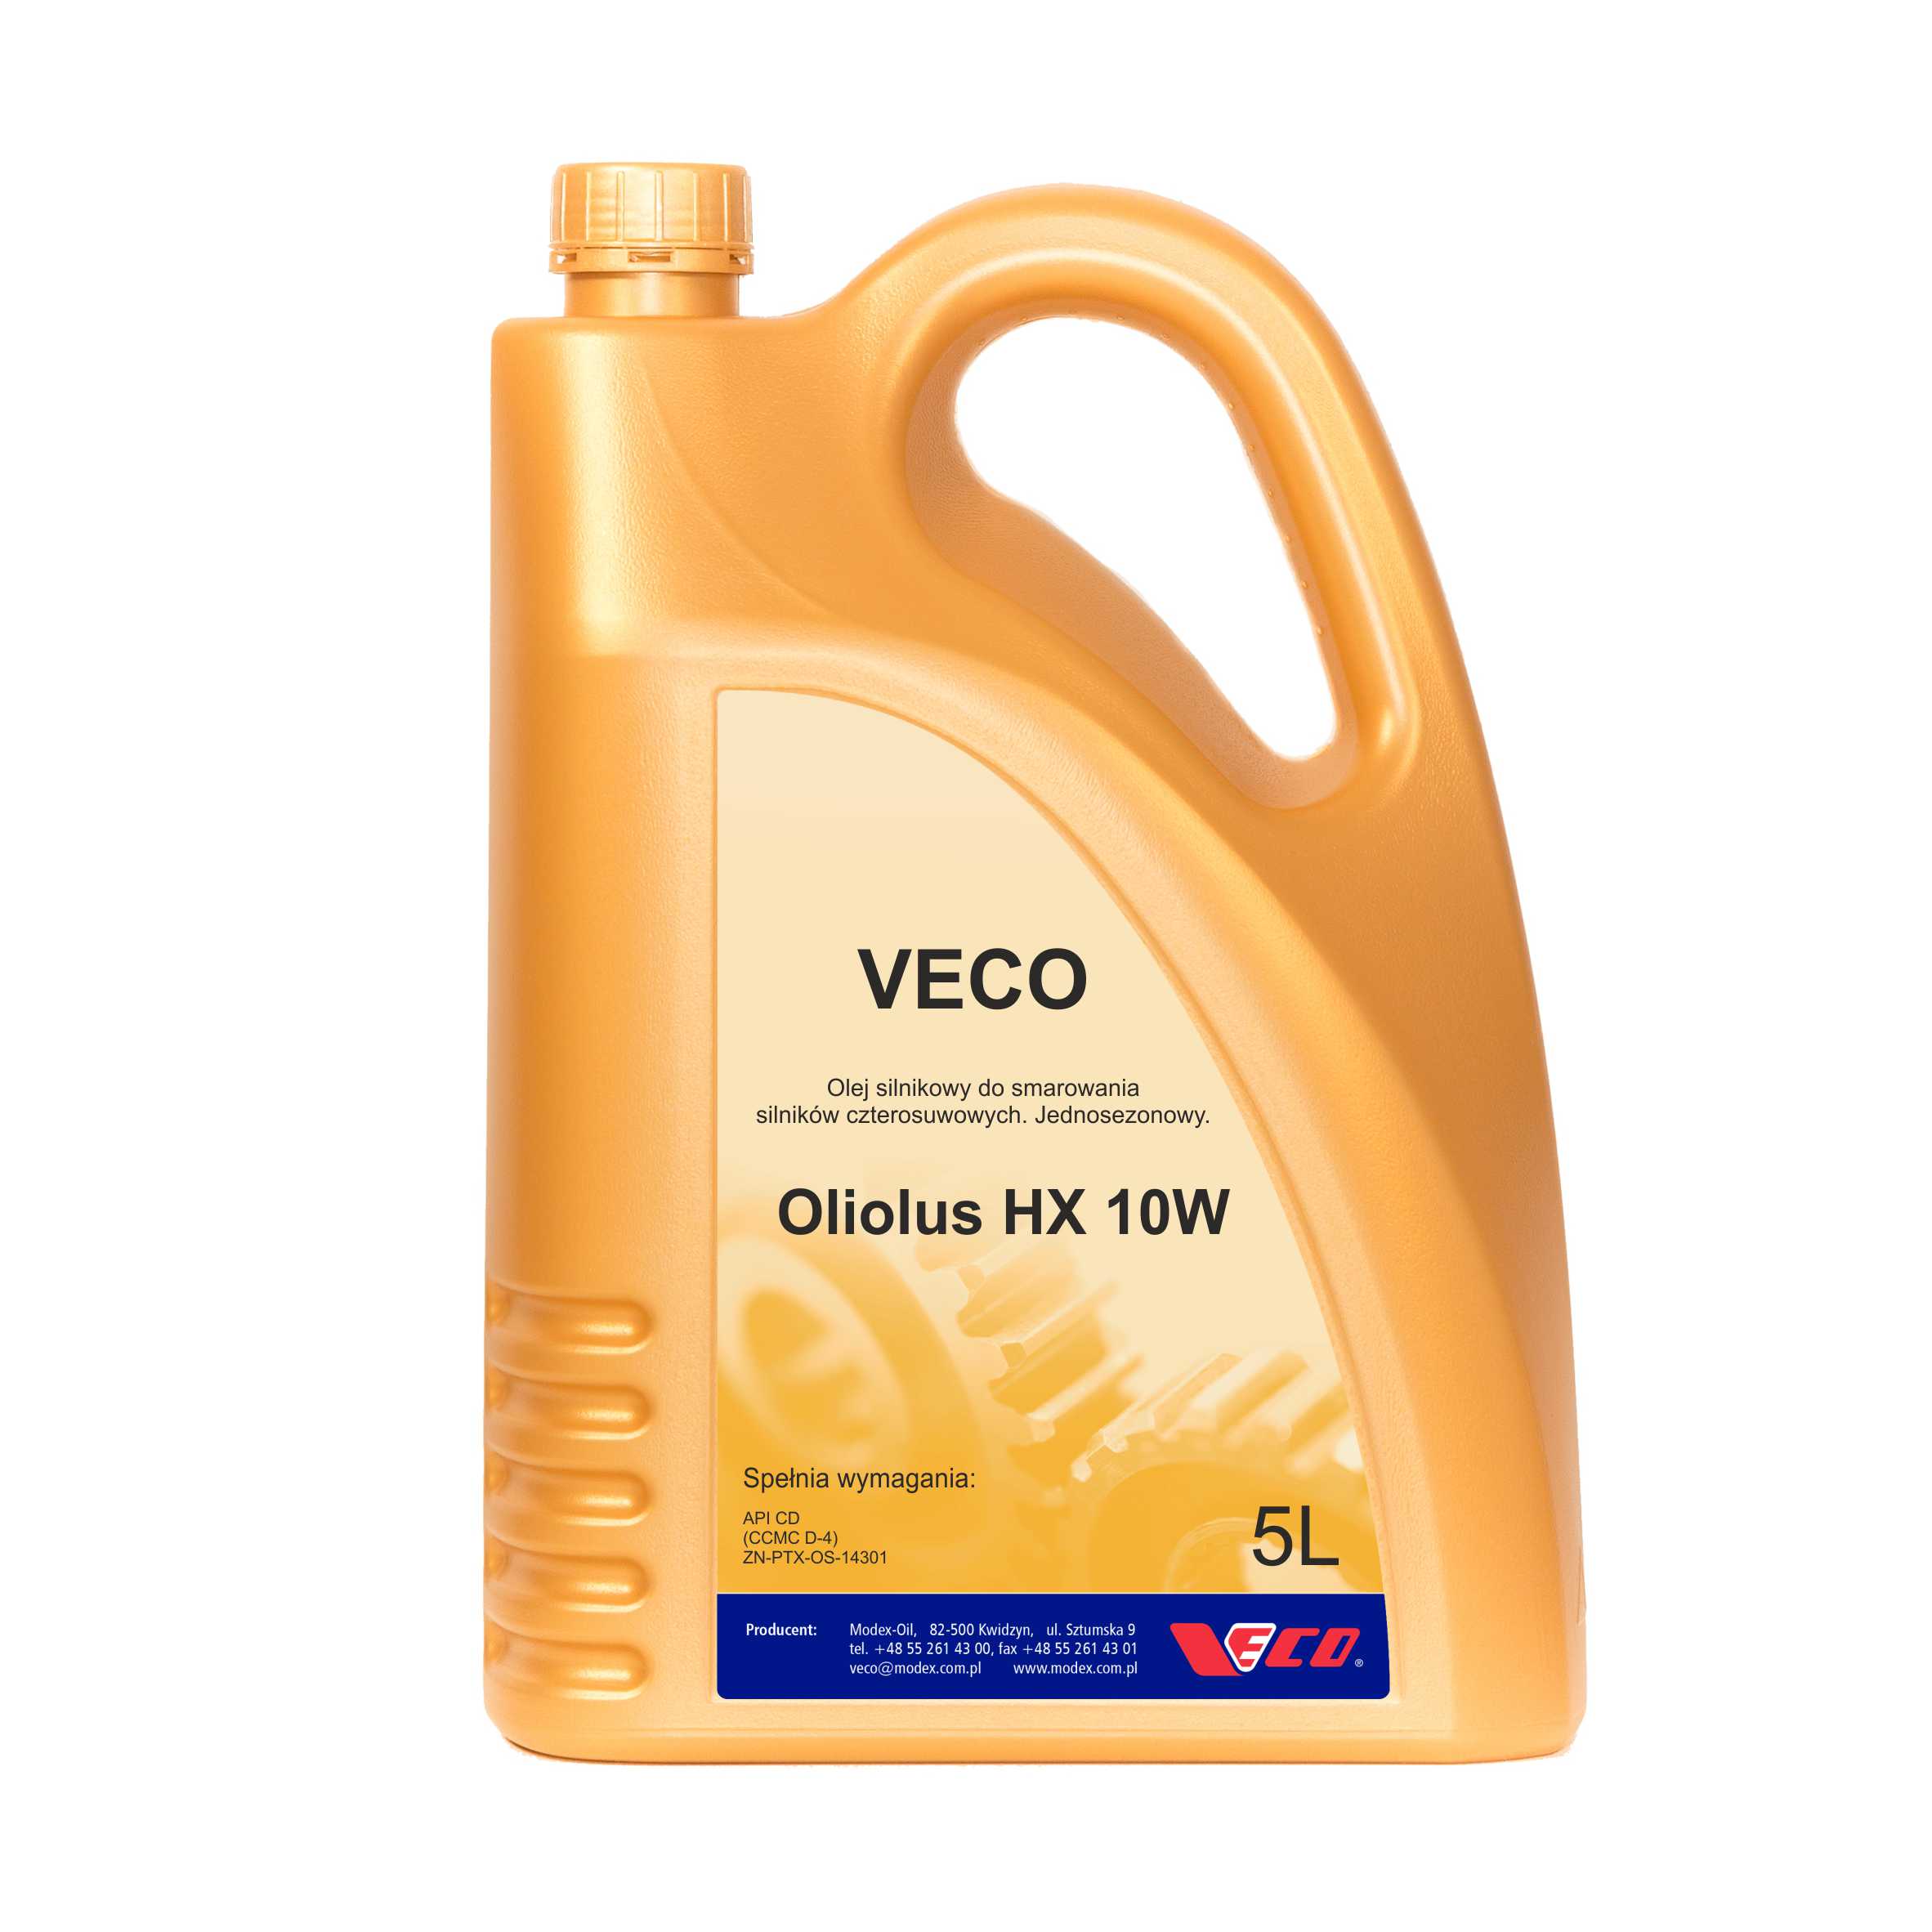 VECO Oliolus HX 10W opak 5L class=